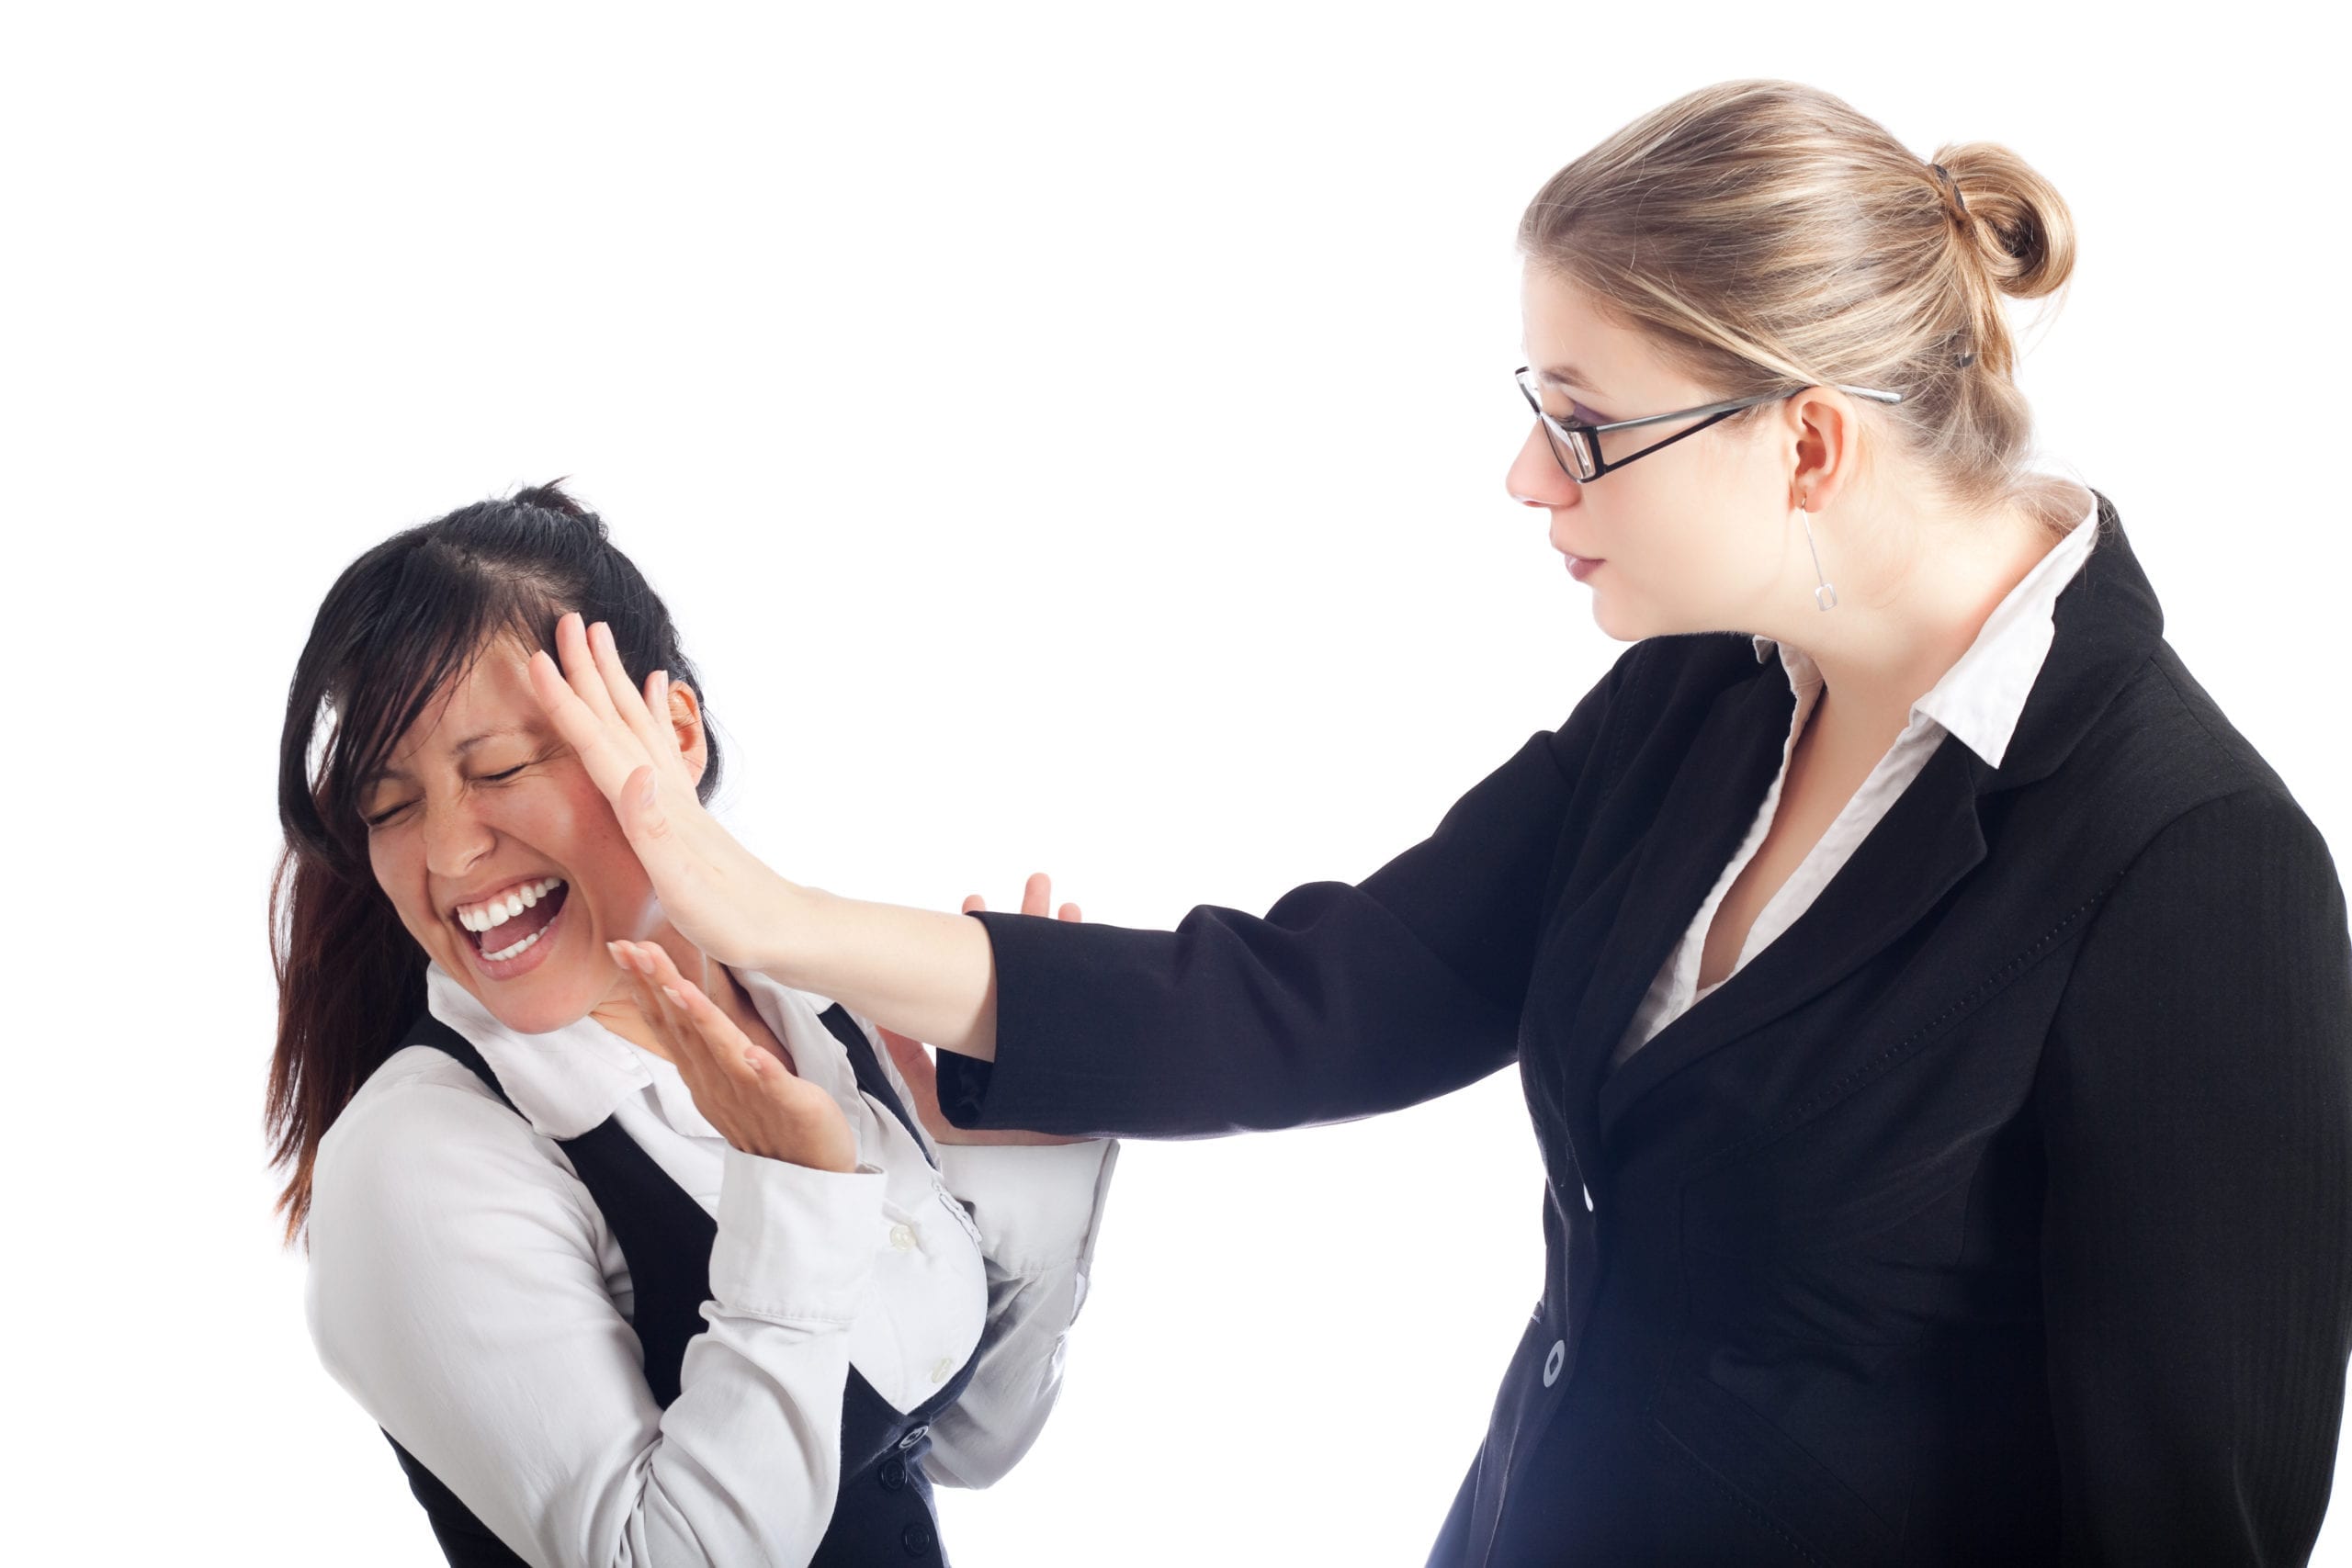 Female supervisor slapping a female employee.